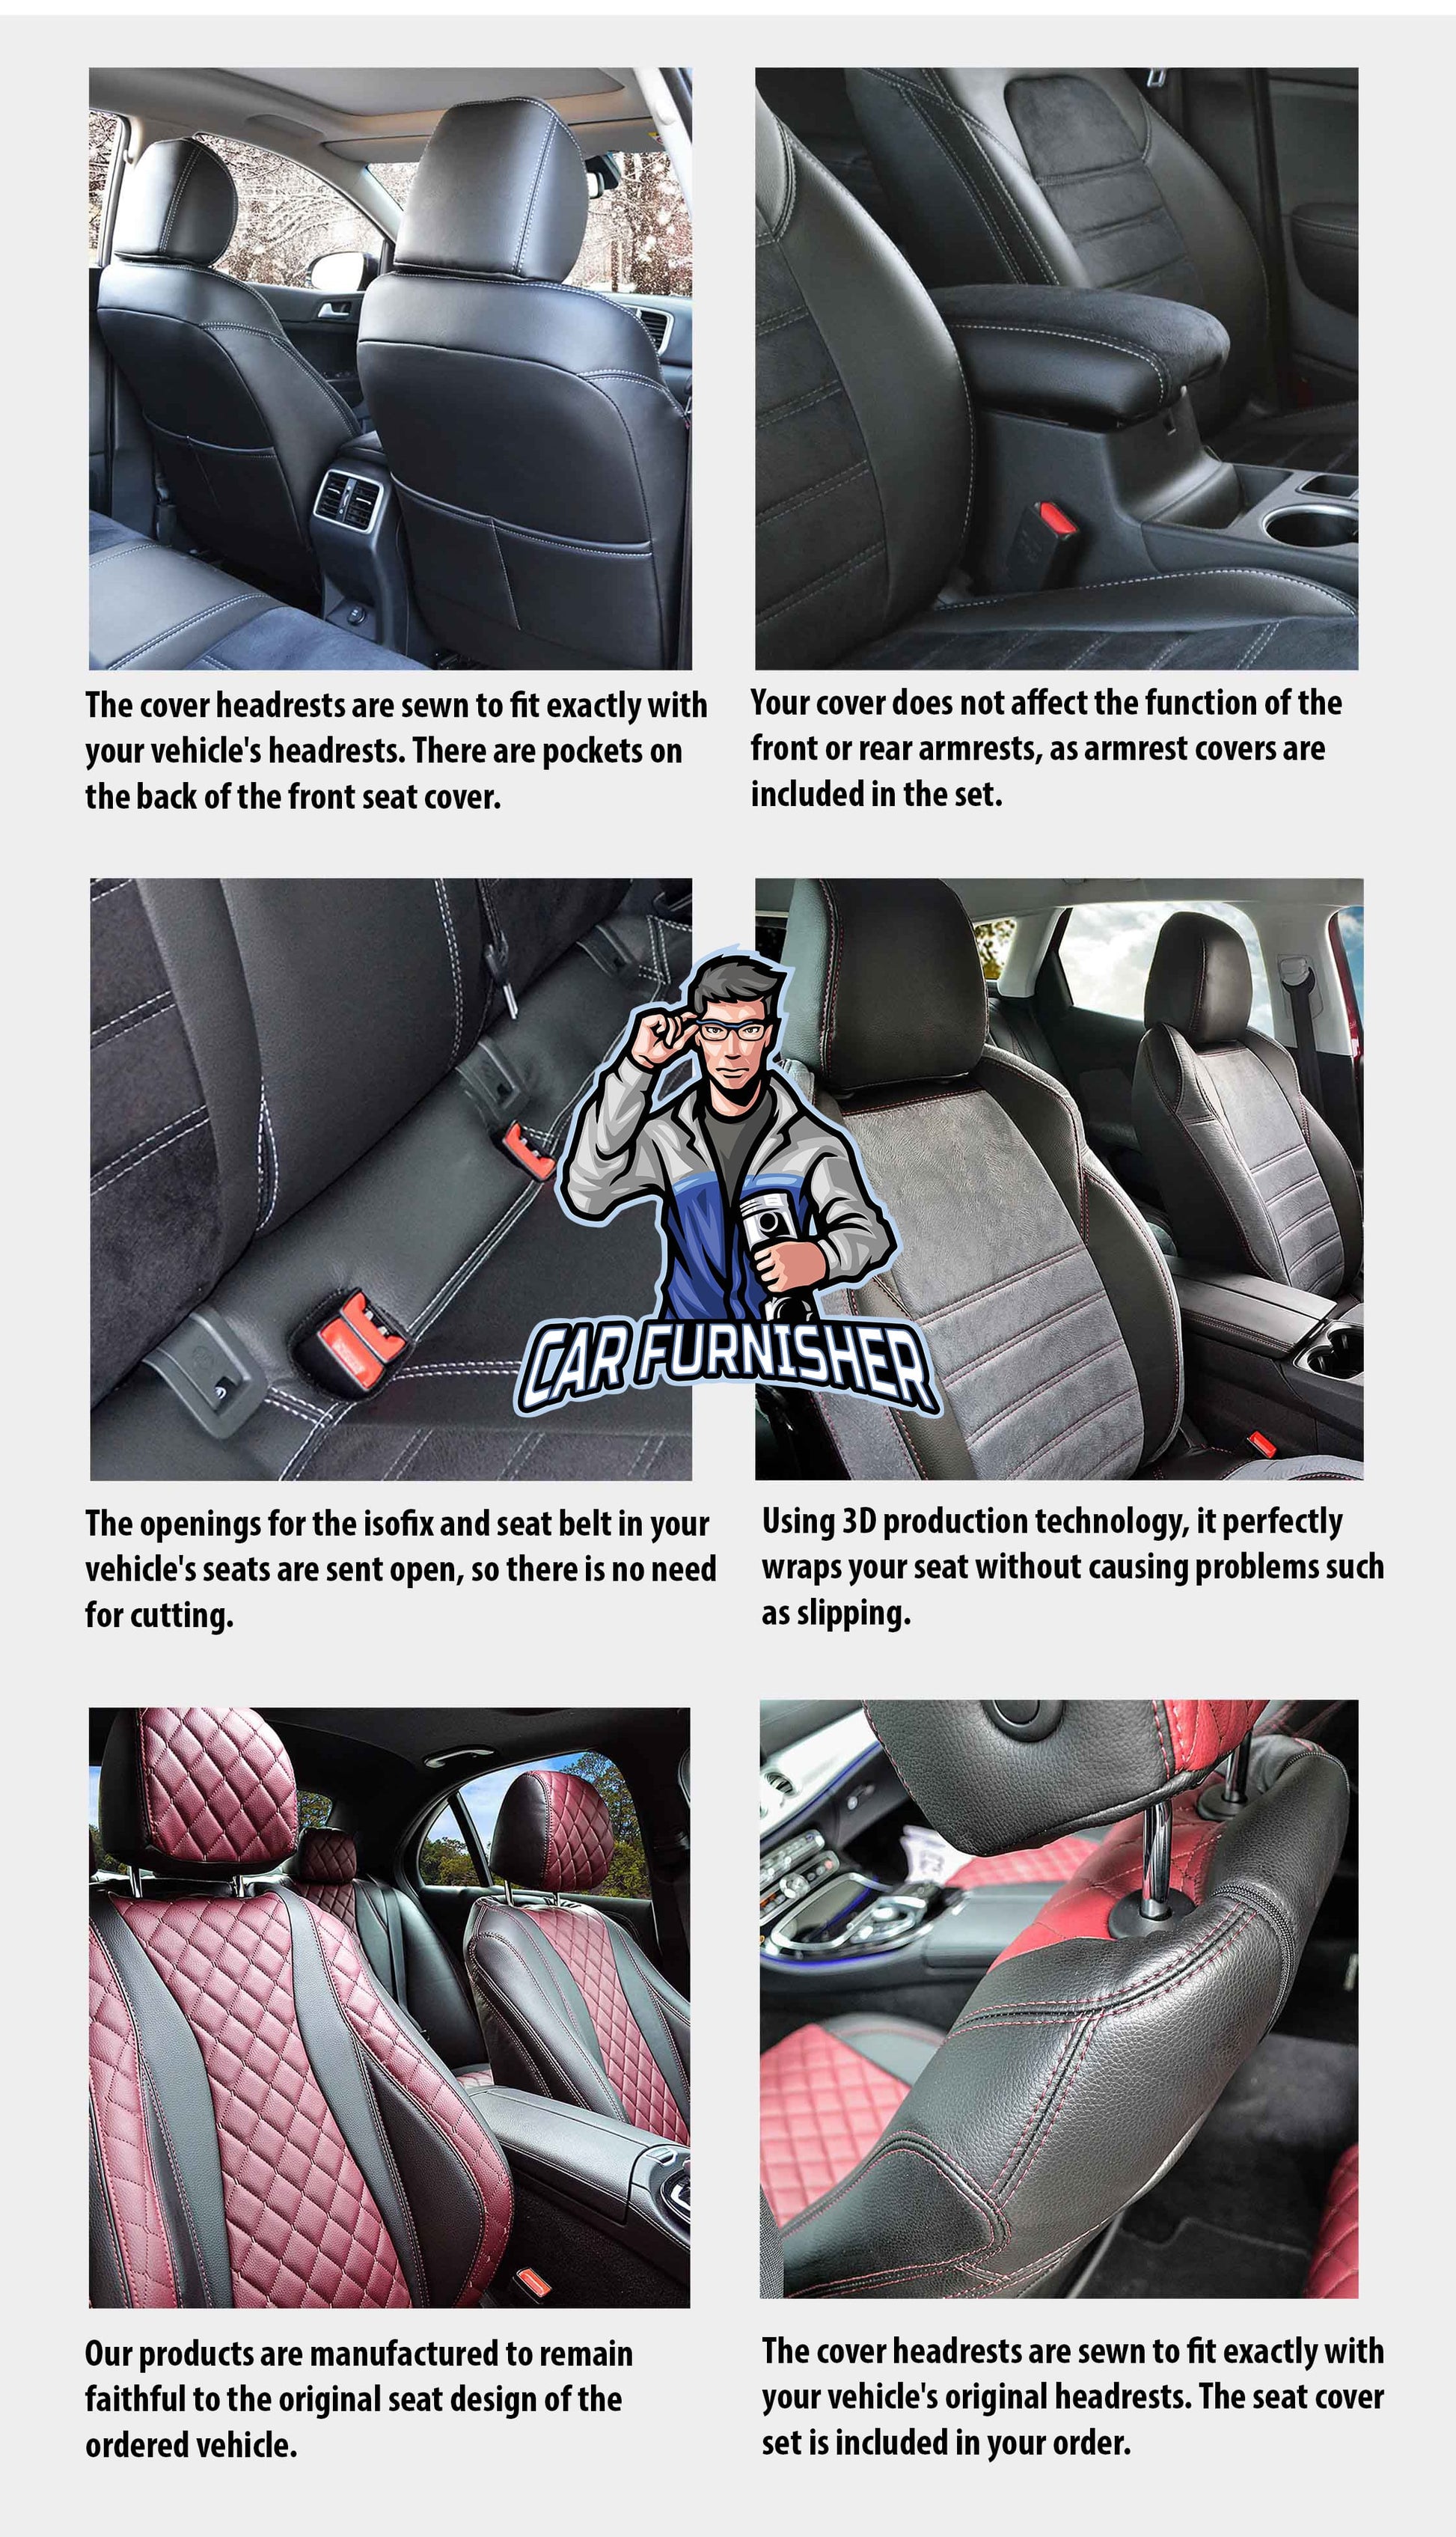 Dacia Sandero Seat Covers Original Jacquard Design Gray Jacquard Fabric